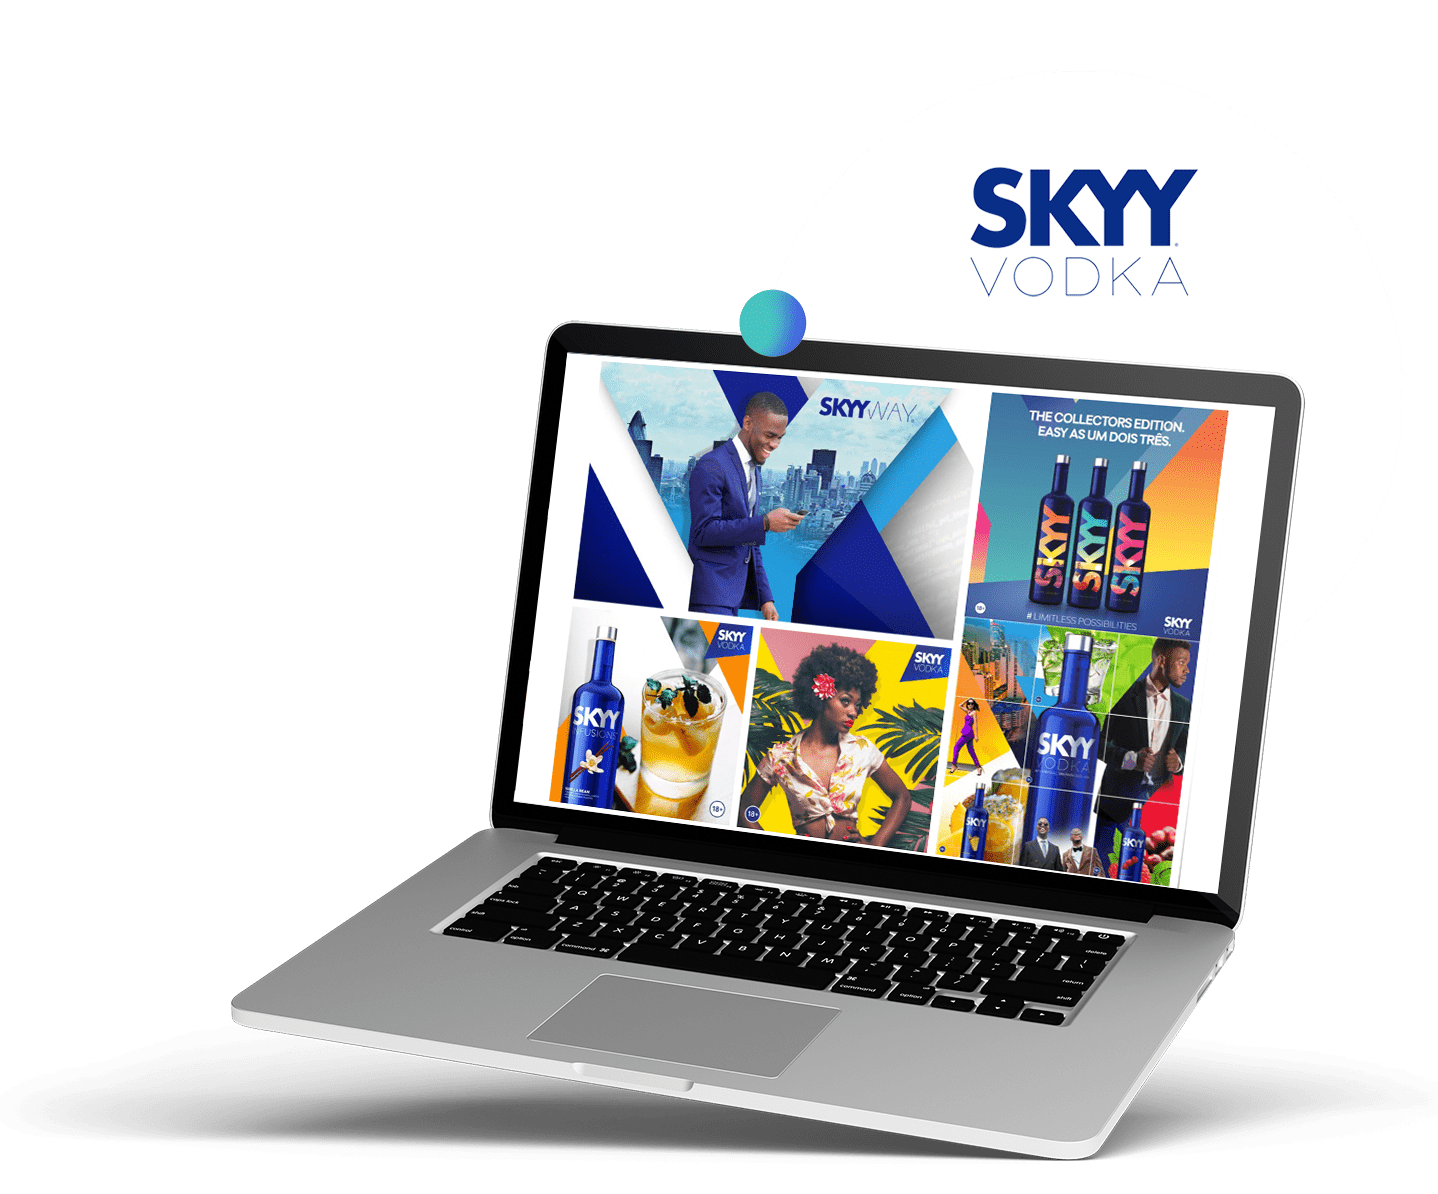 SKYY_Digital_Campaign